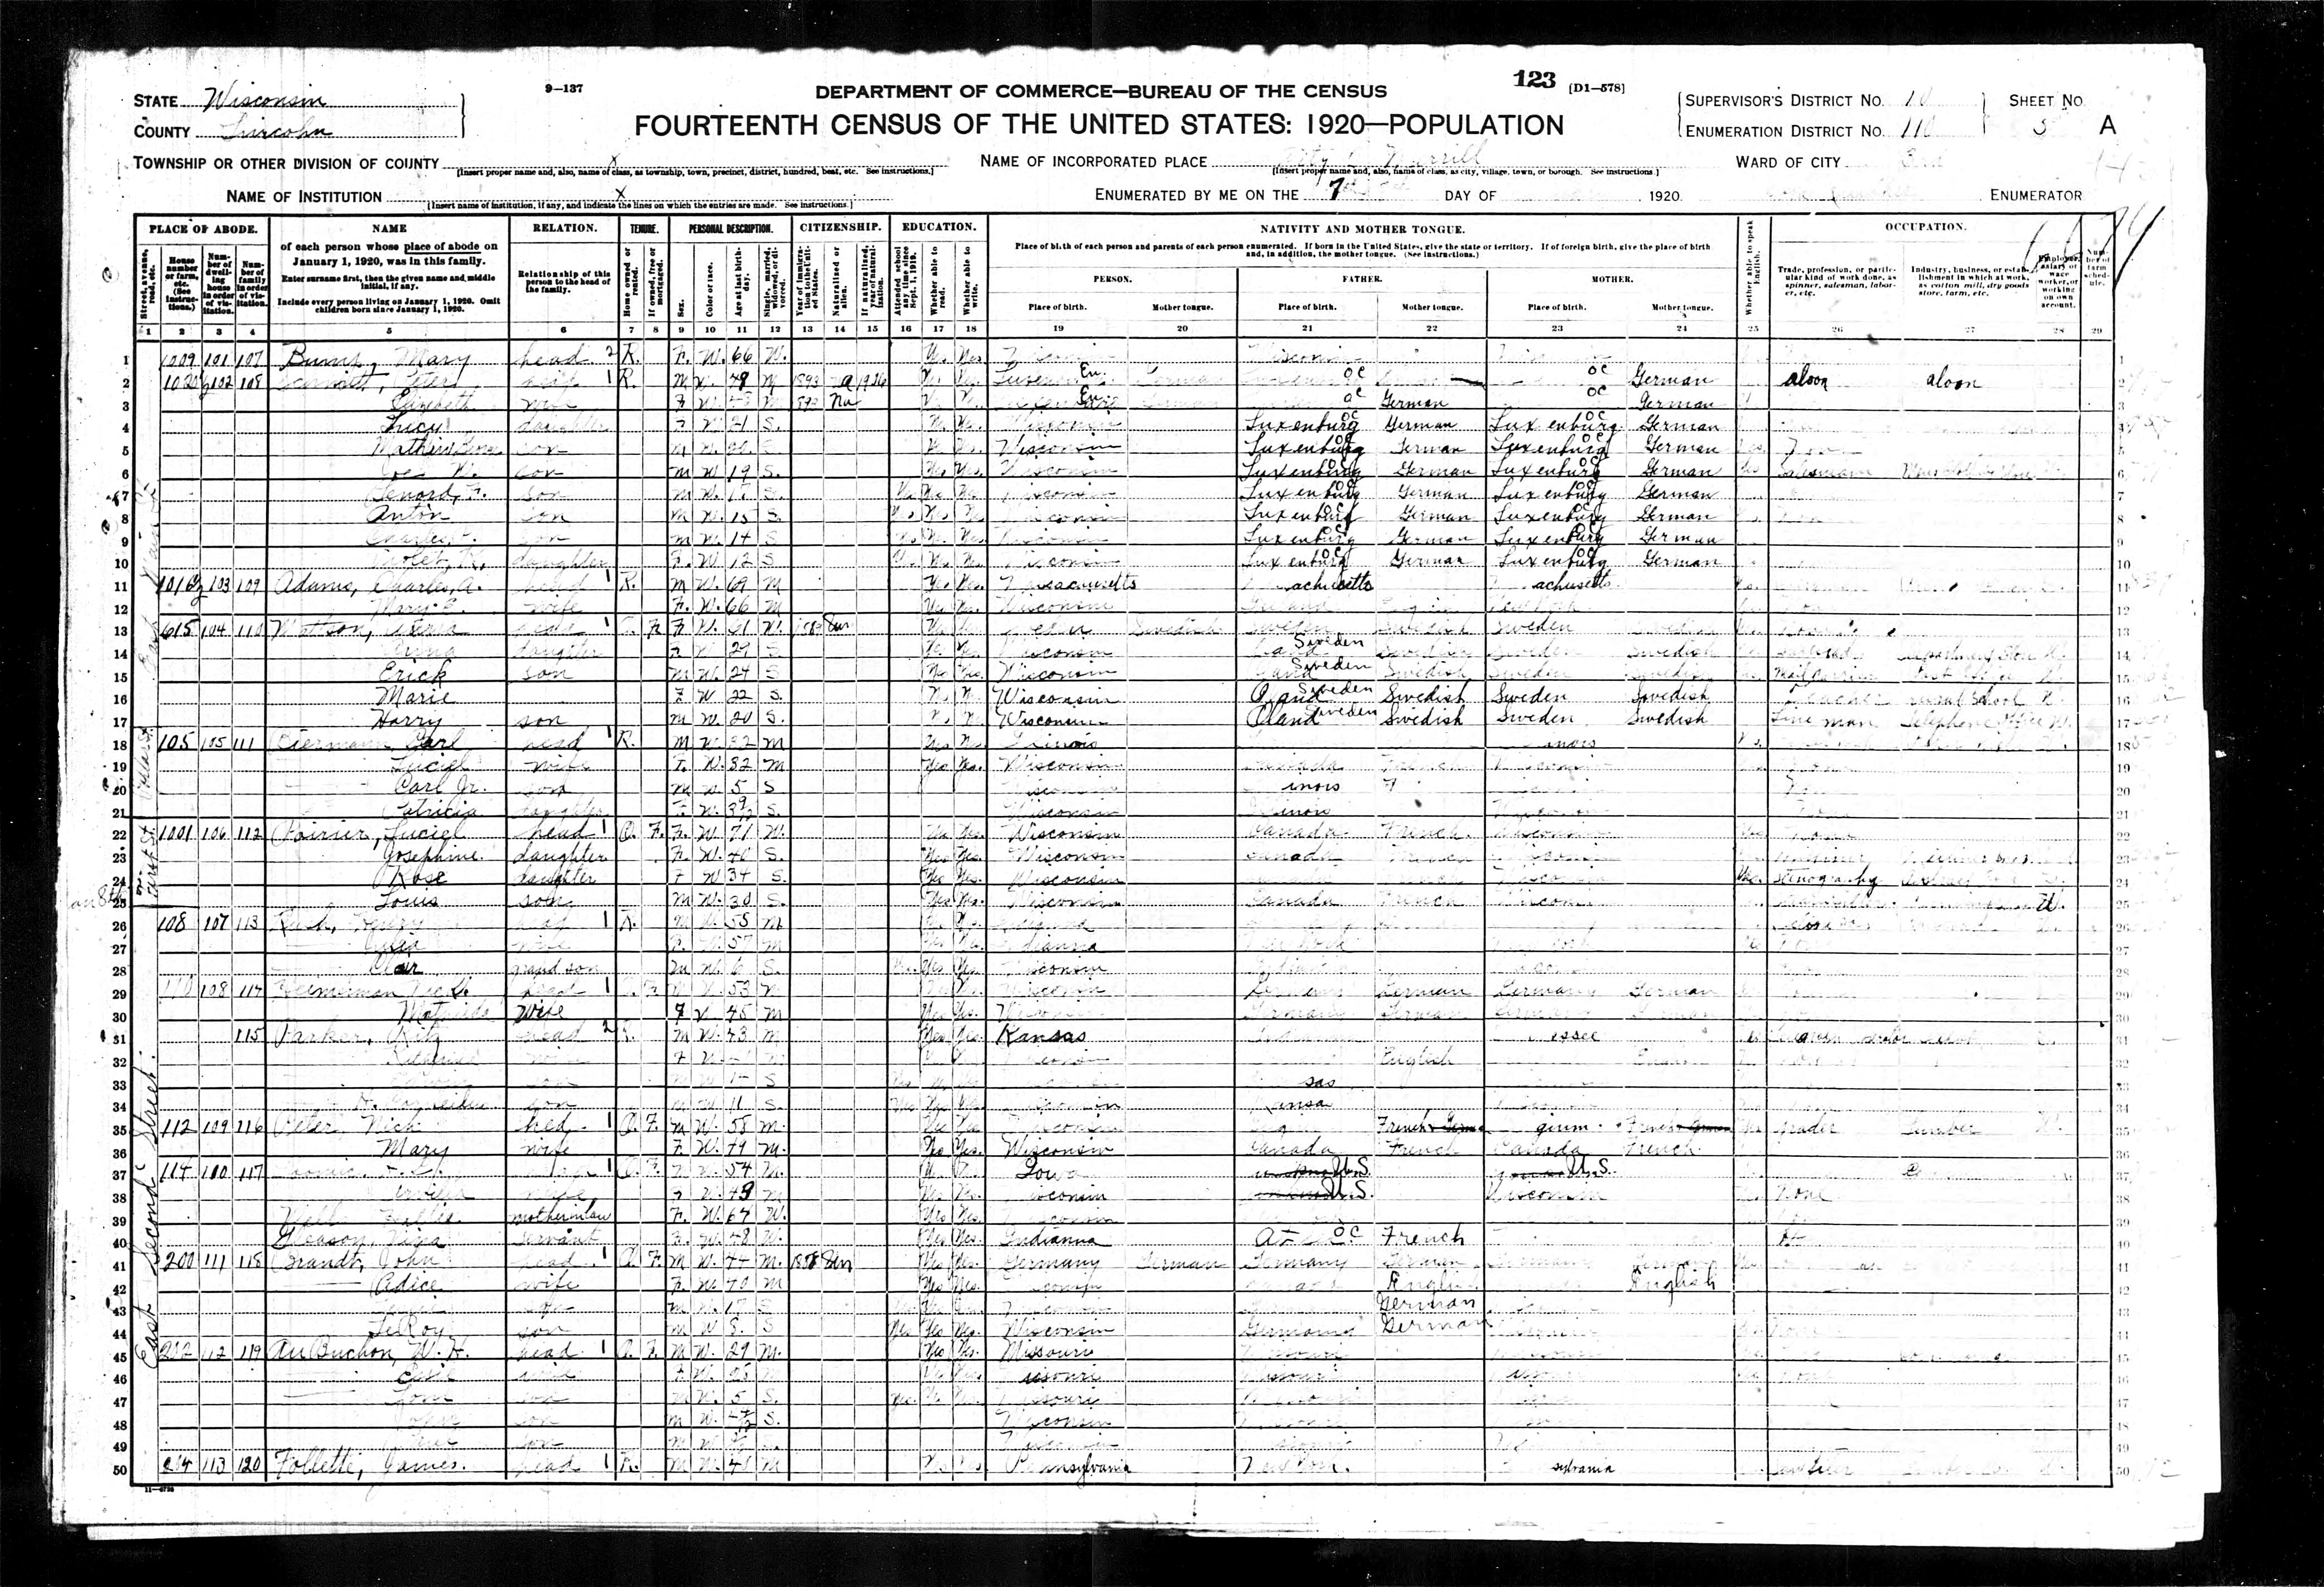 1920 Census, Merrill, Lincoln county, Wisconsin